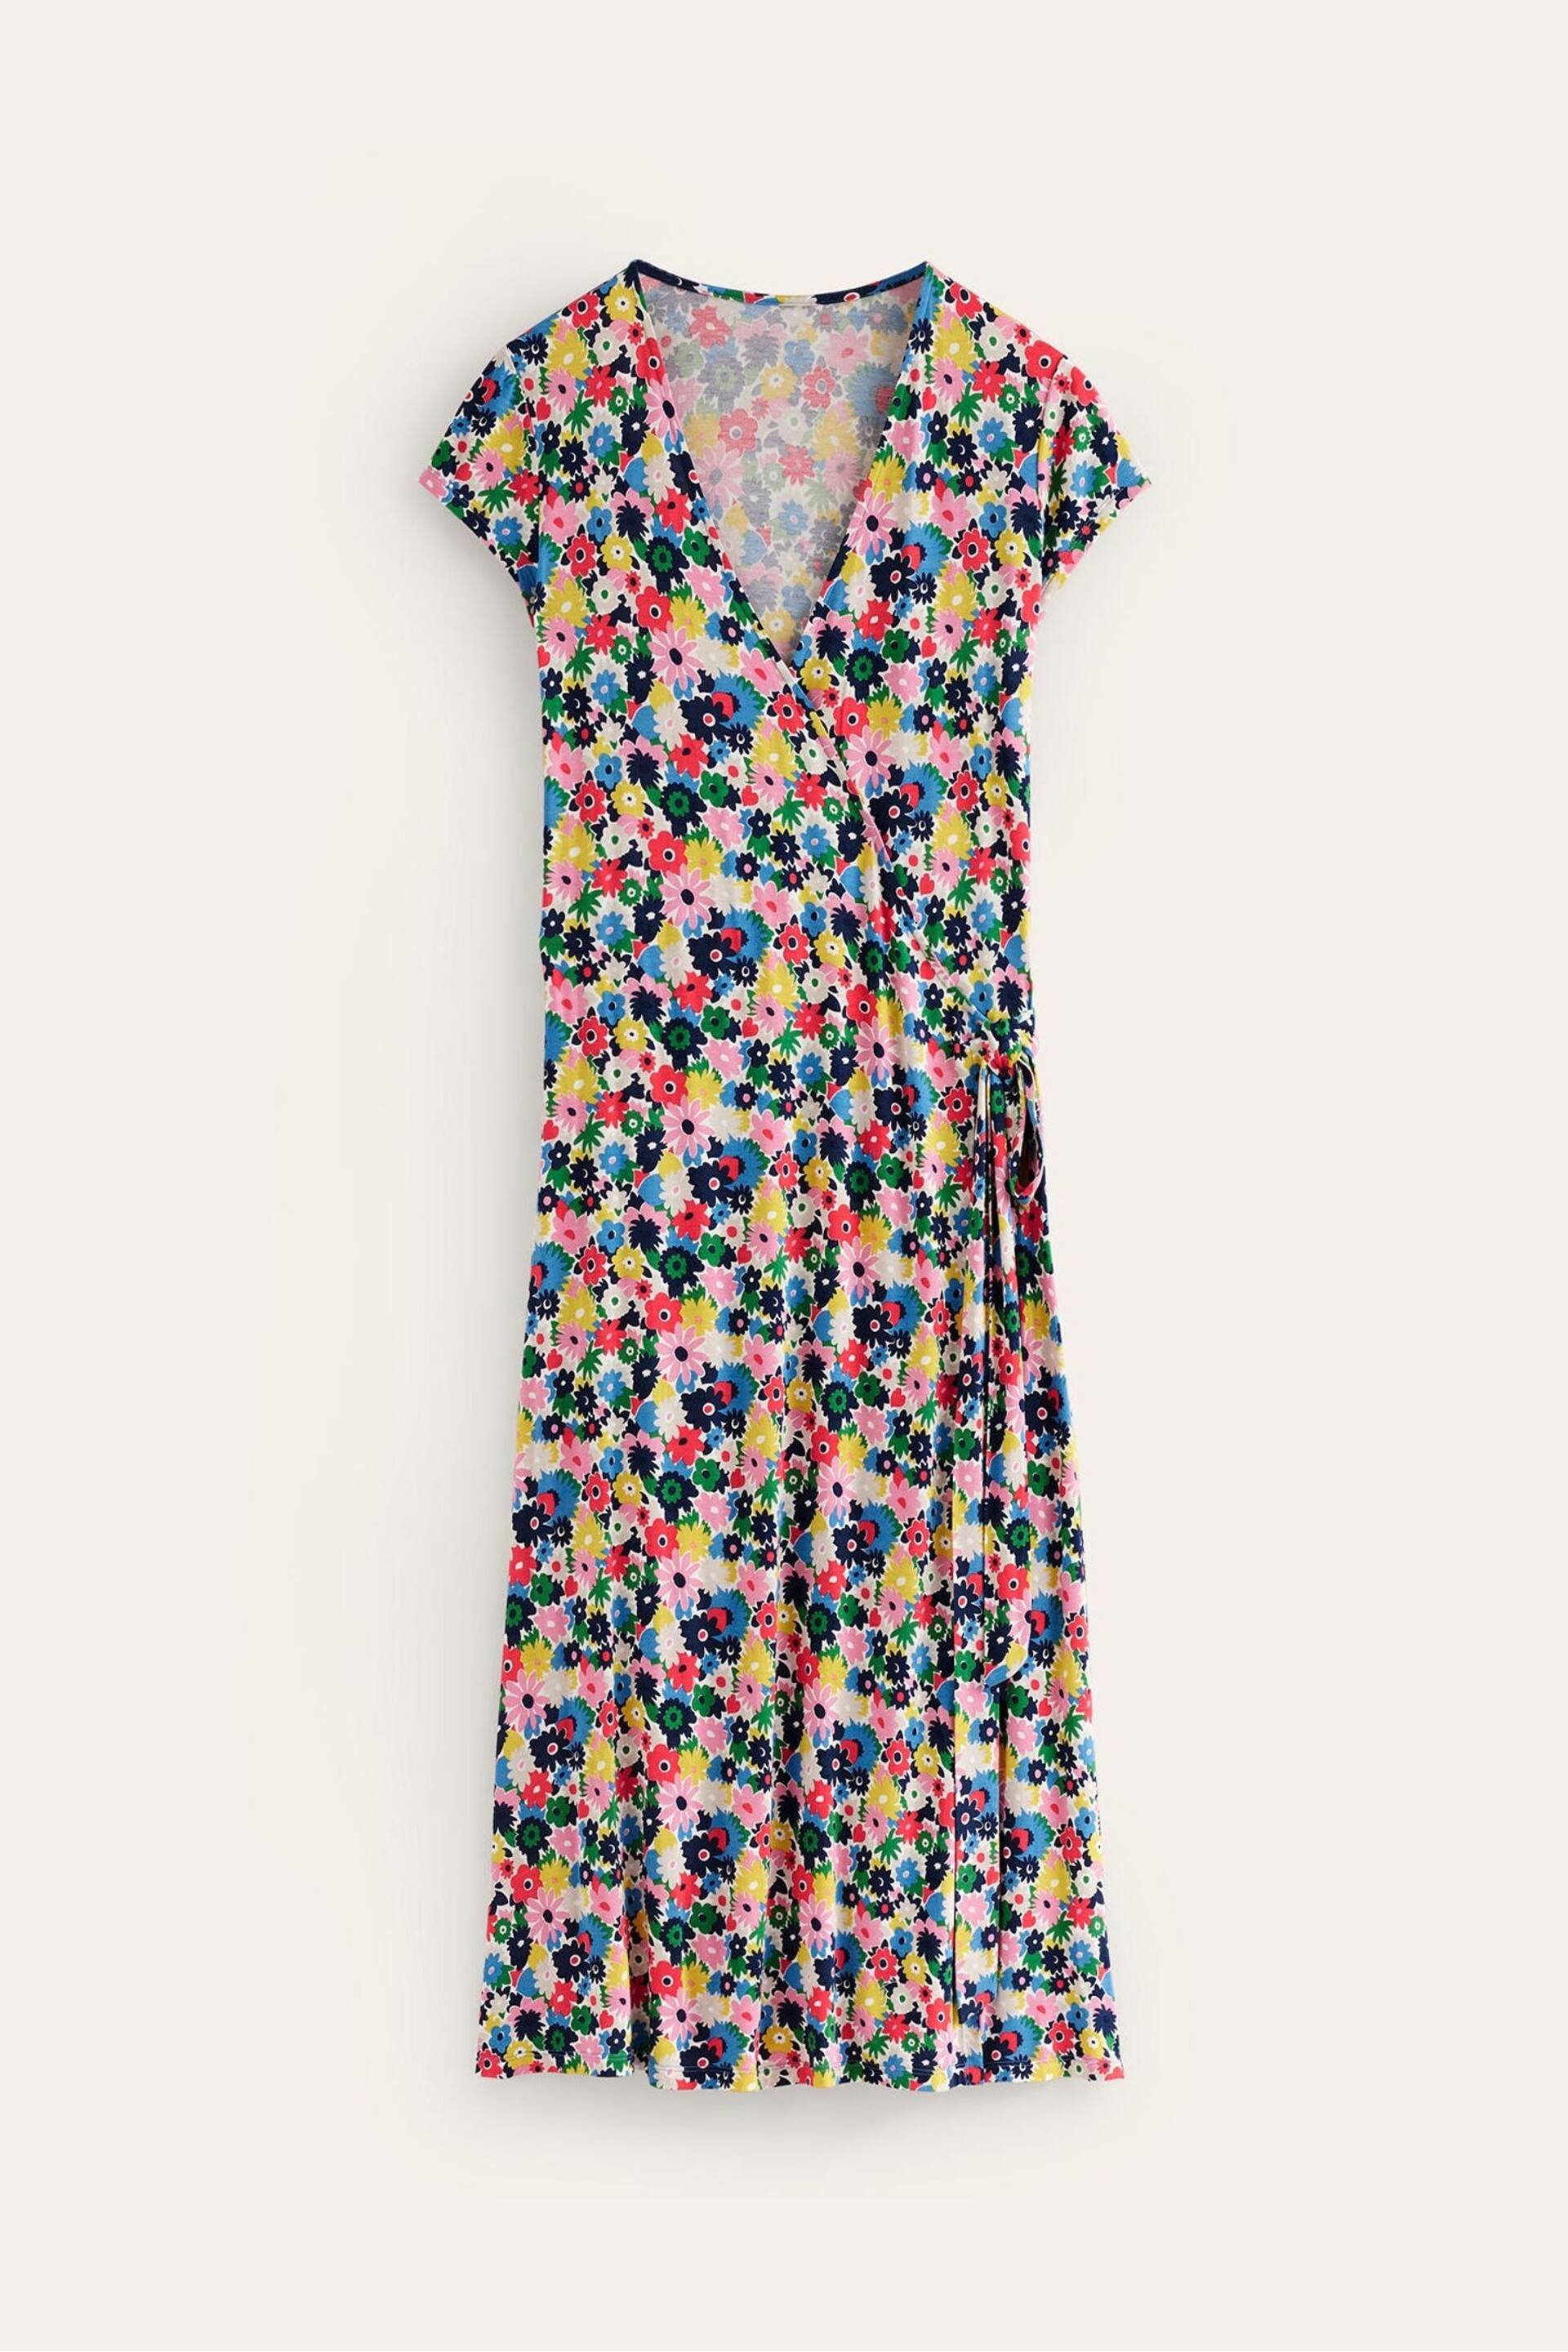 Boden Blue Petite Joanna Cap Sleeve Wrap Dress - Image 5 of 5